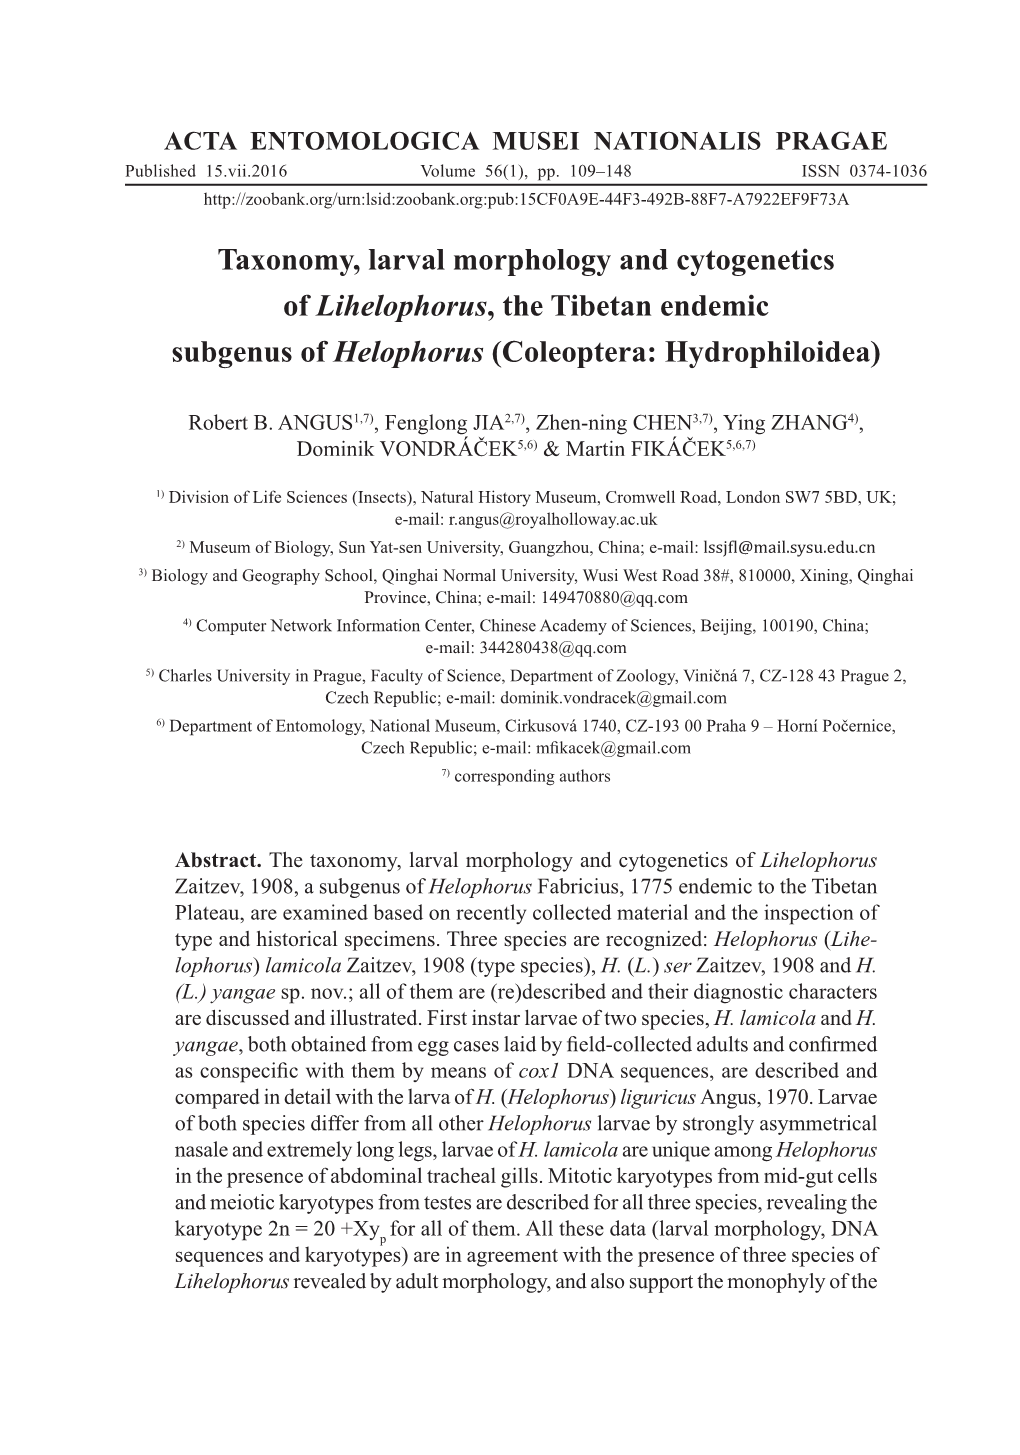 Taxonomy, Larval Morphology and Cytogenetics of Lihelophorus, the Tibetan Endemic Subgenus of Helophorus (Coleoptera: Hydrophiloidea)